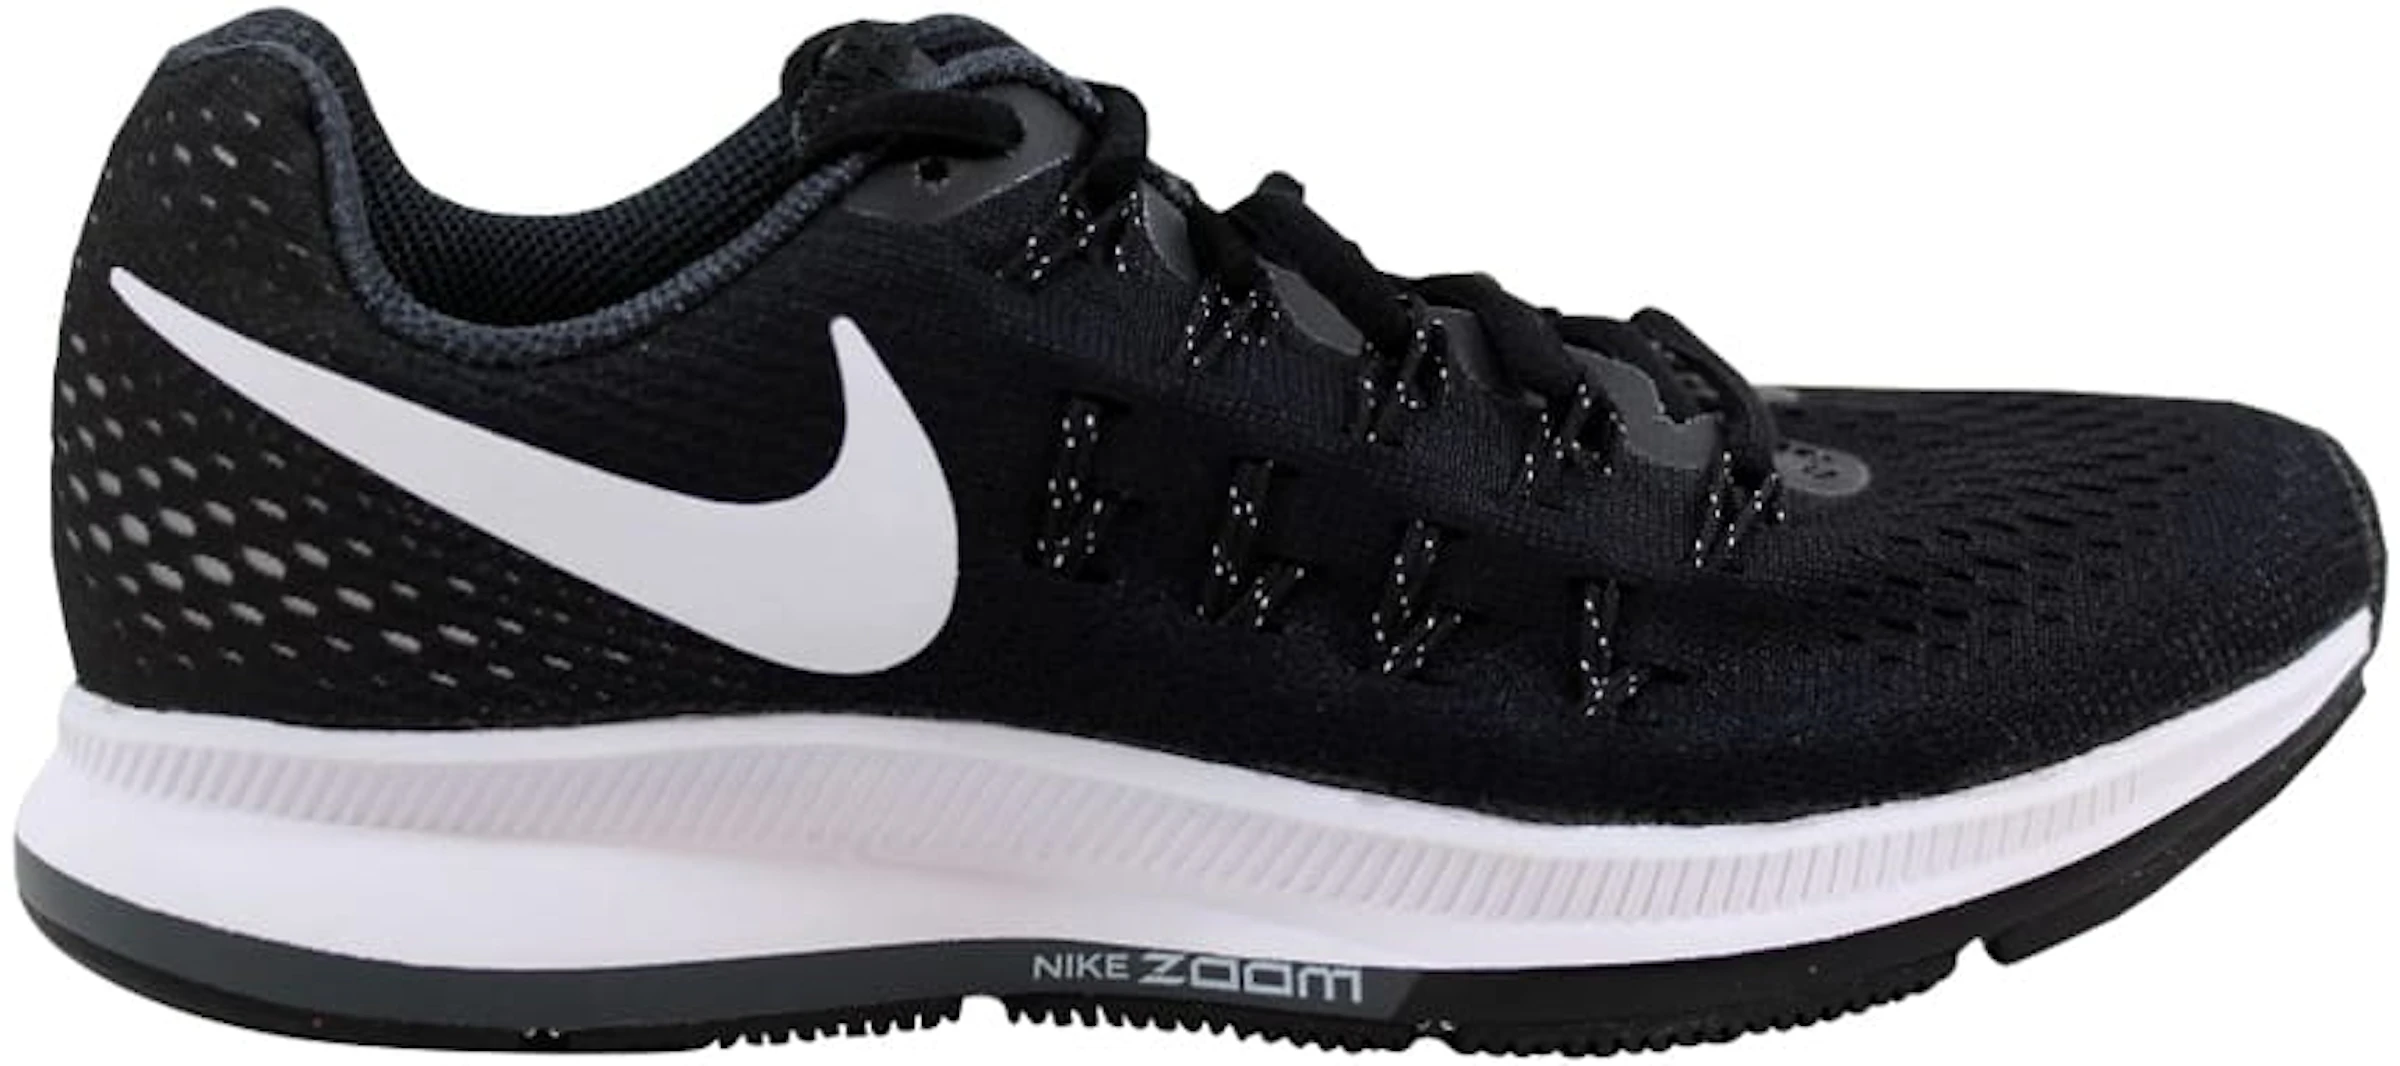 Nike Zoom Pegasus 33 Black/White-Anthracite-Cool Grey (W) - 831356-001 - ES